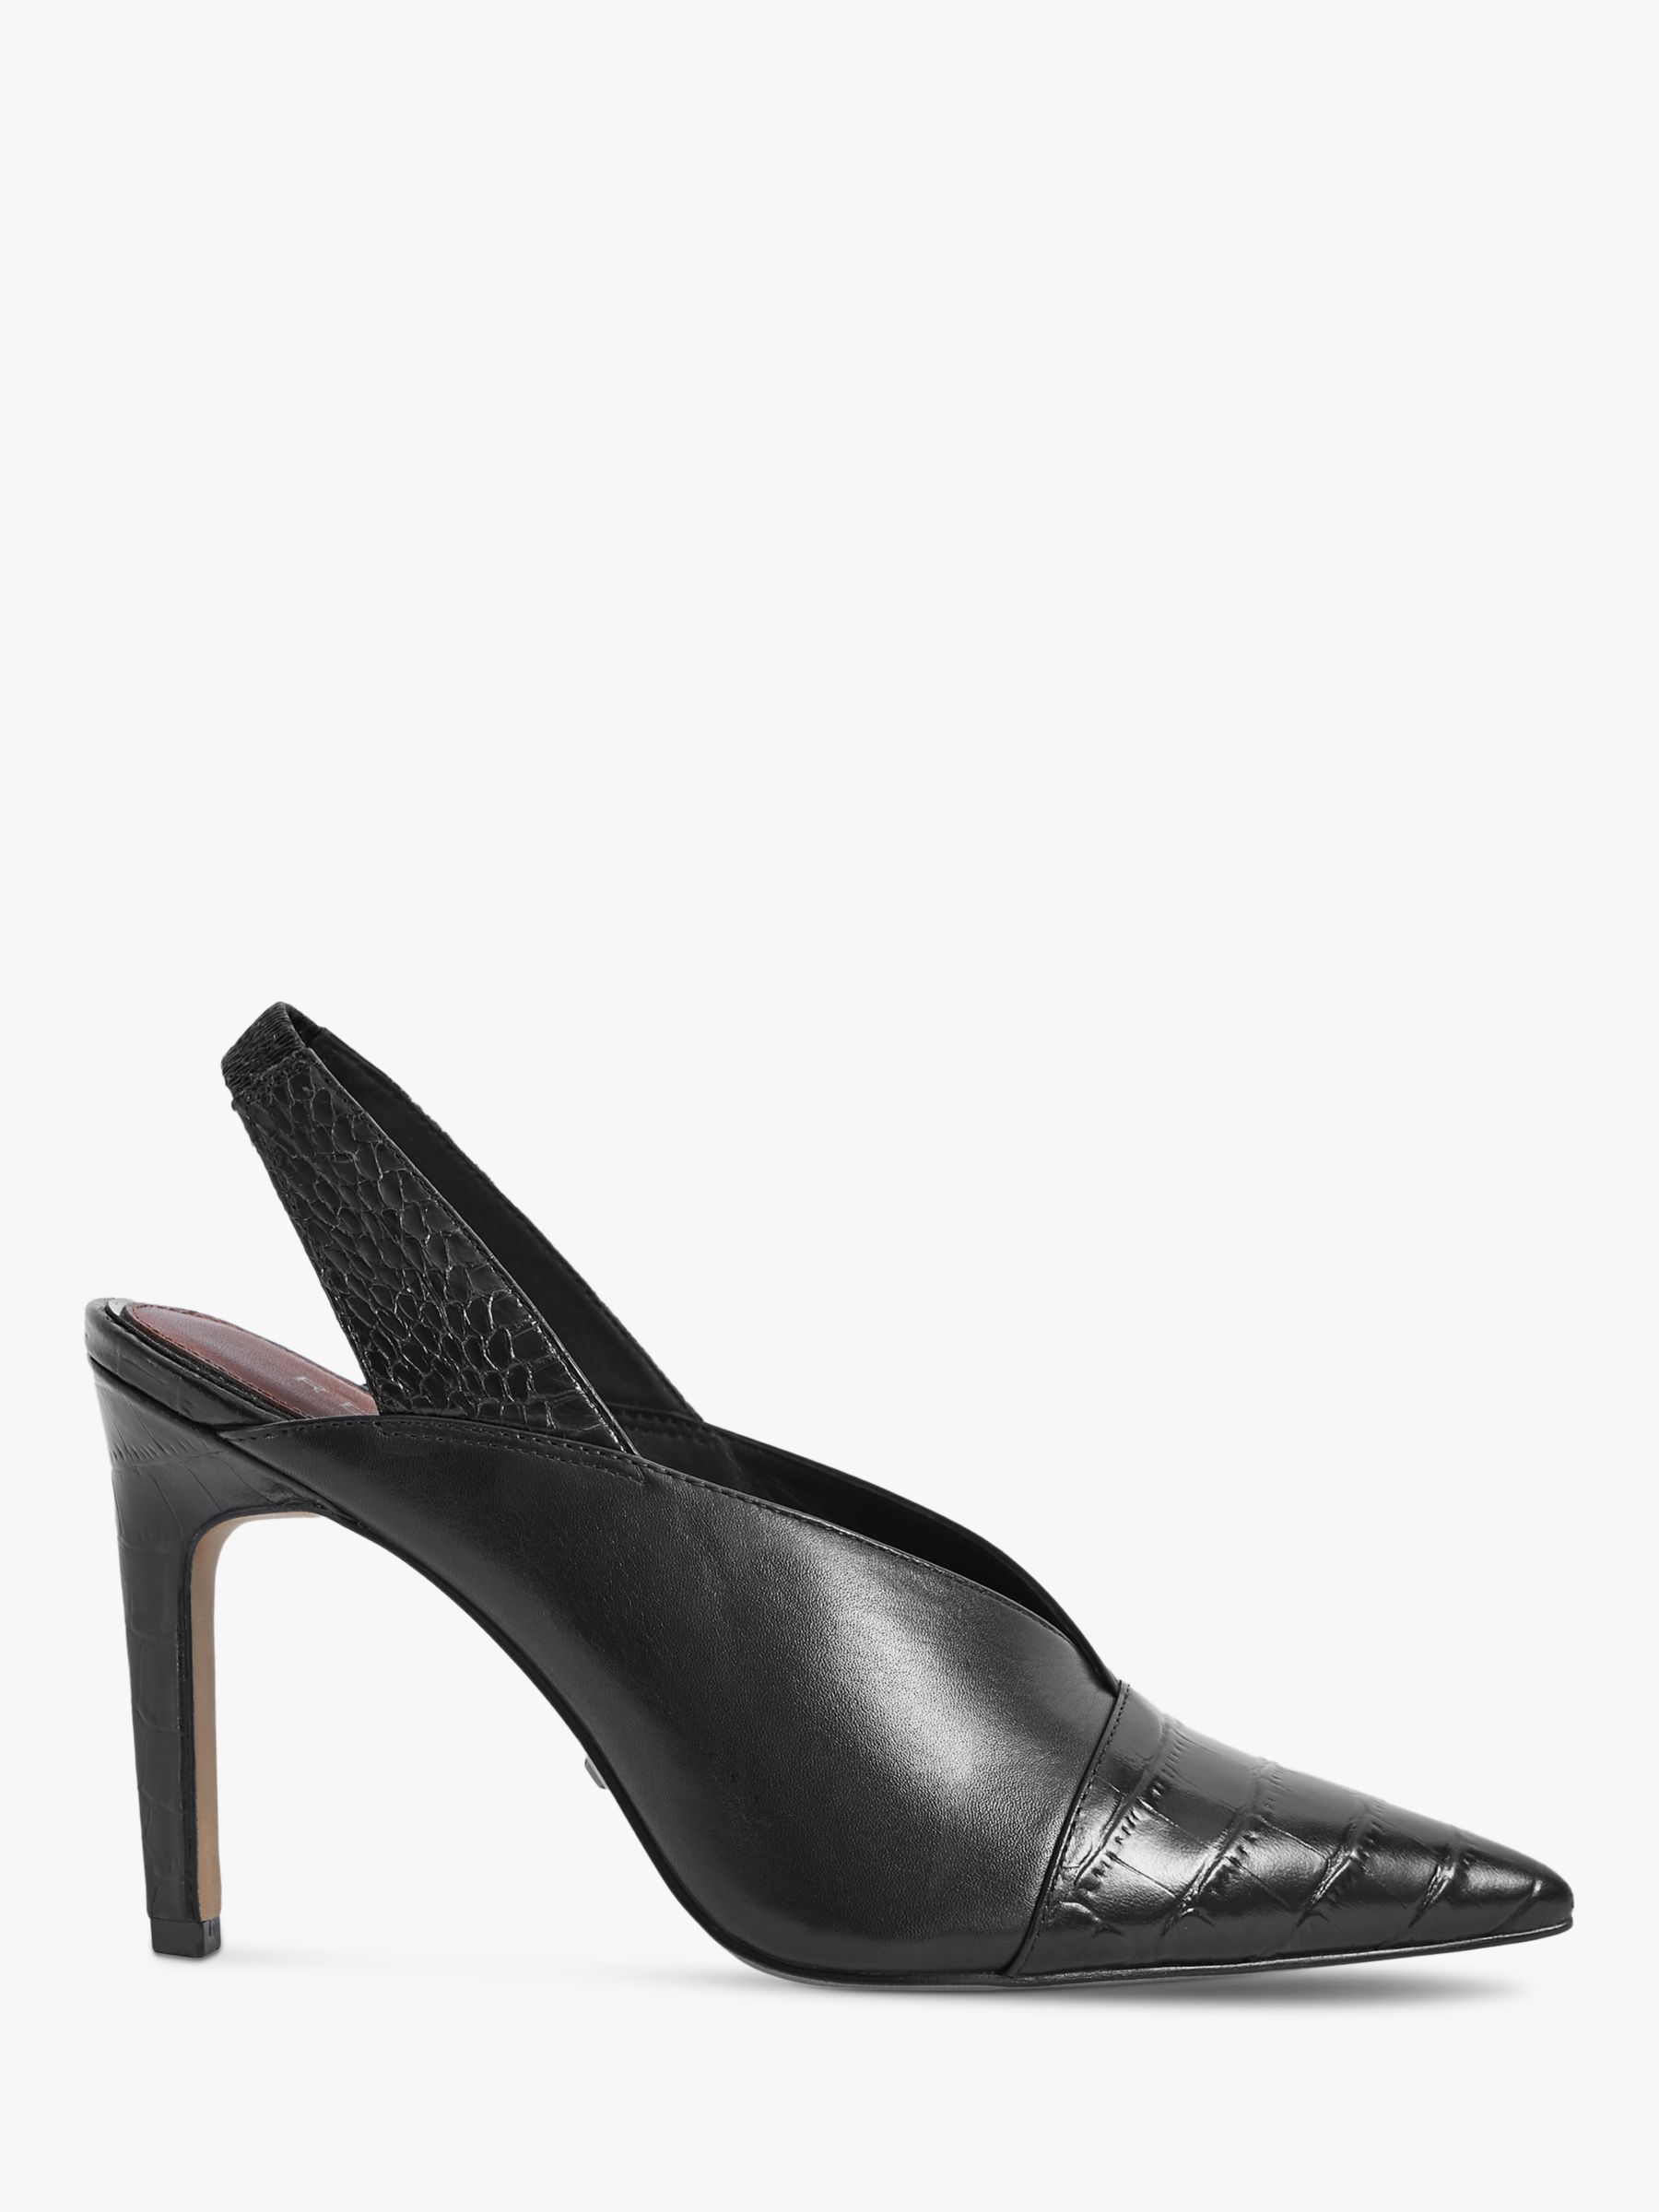 Reiss Angelica Leather Sling Back Heels, Black at John Lewis & Partners